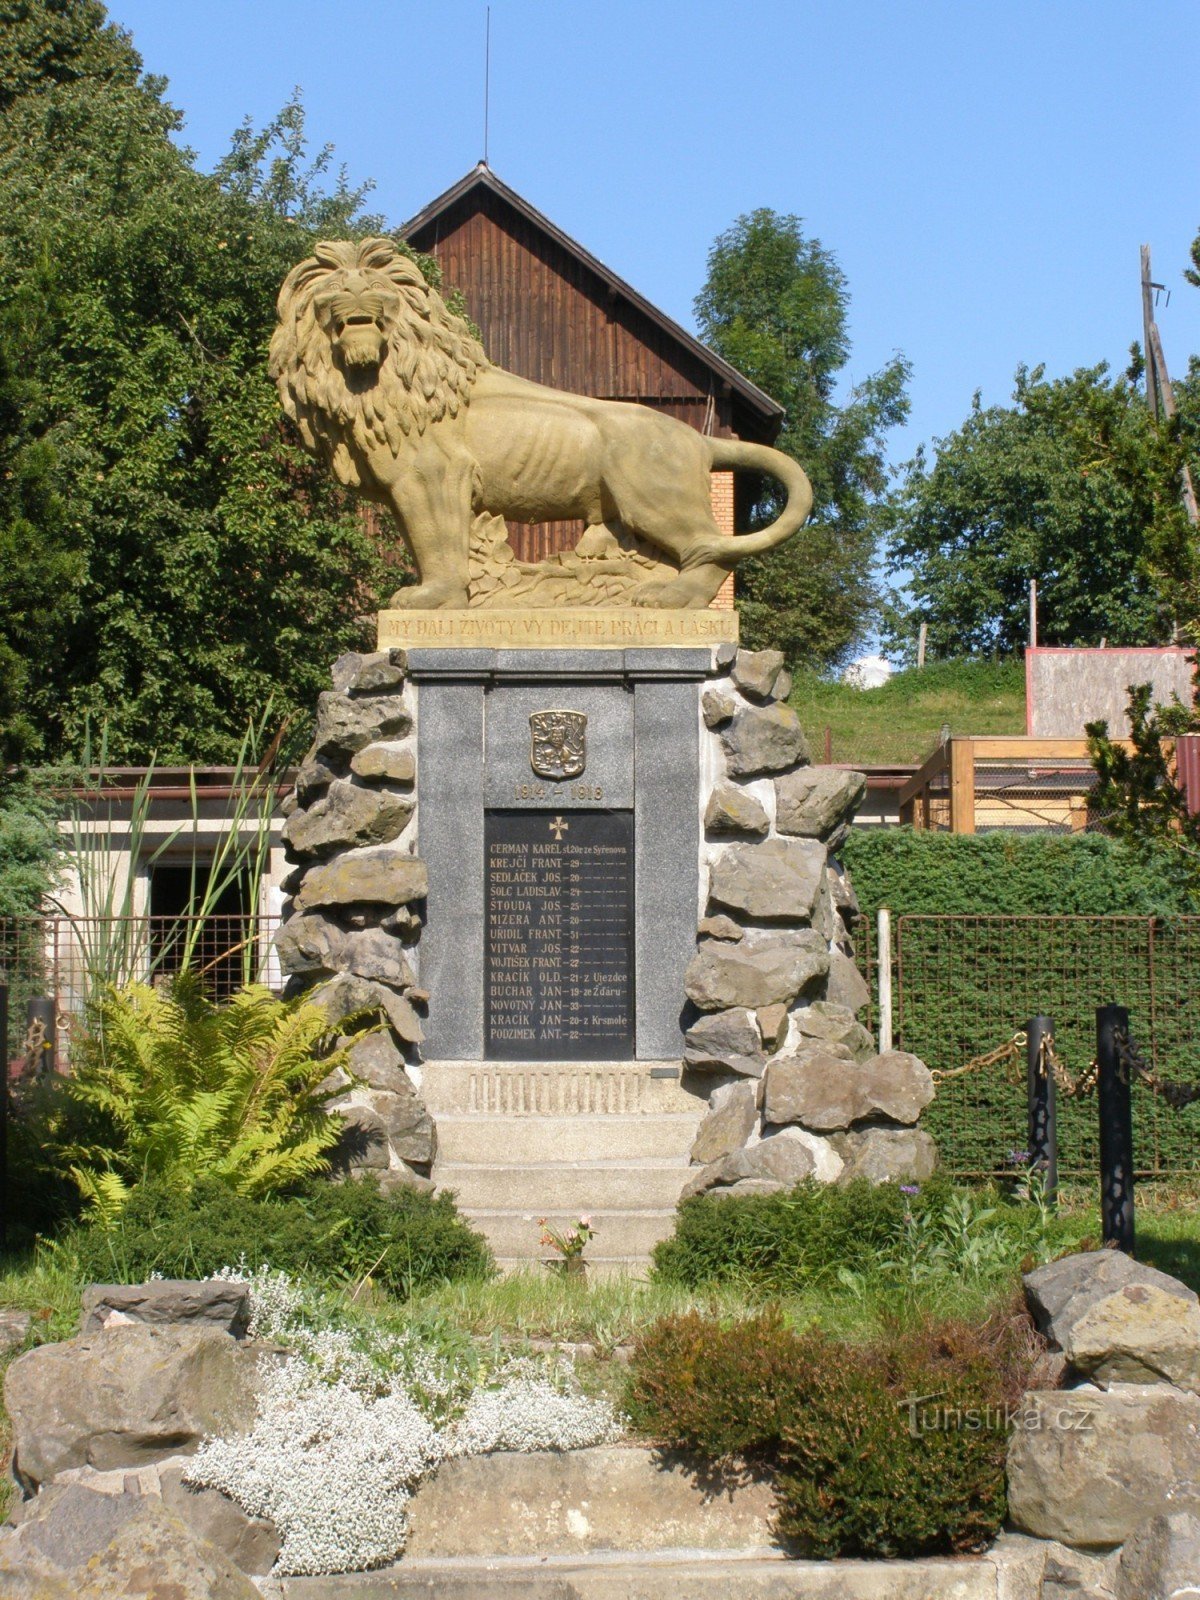 Syřenov - monument voor de slachtoffers van de 1e St. oorlog